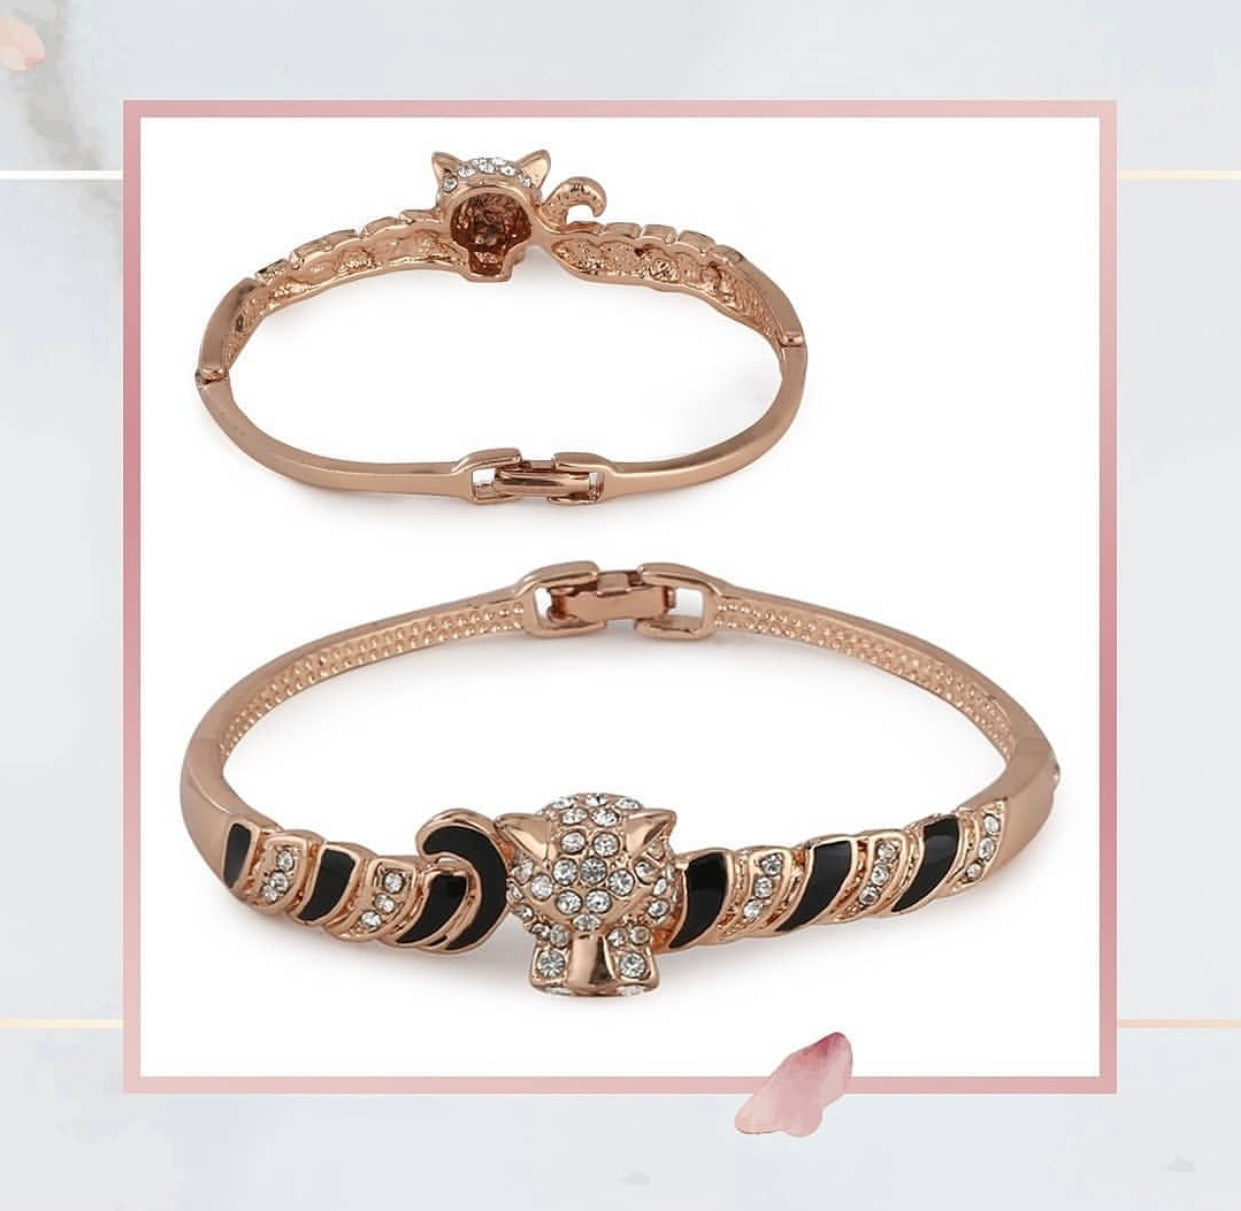 Buy Swarovski Pearl & Austrian Crystal Charm Dangling DIY Bracelet for  Women & Girls at Amazon.in